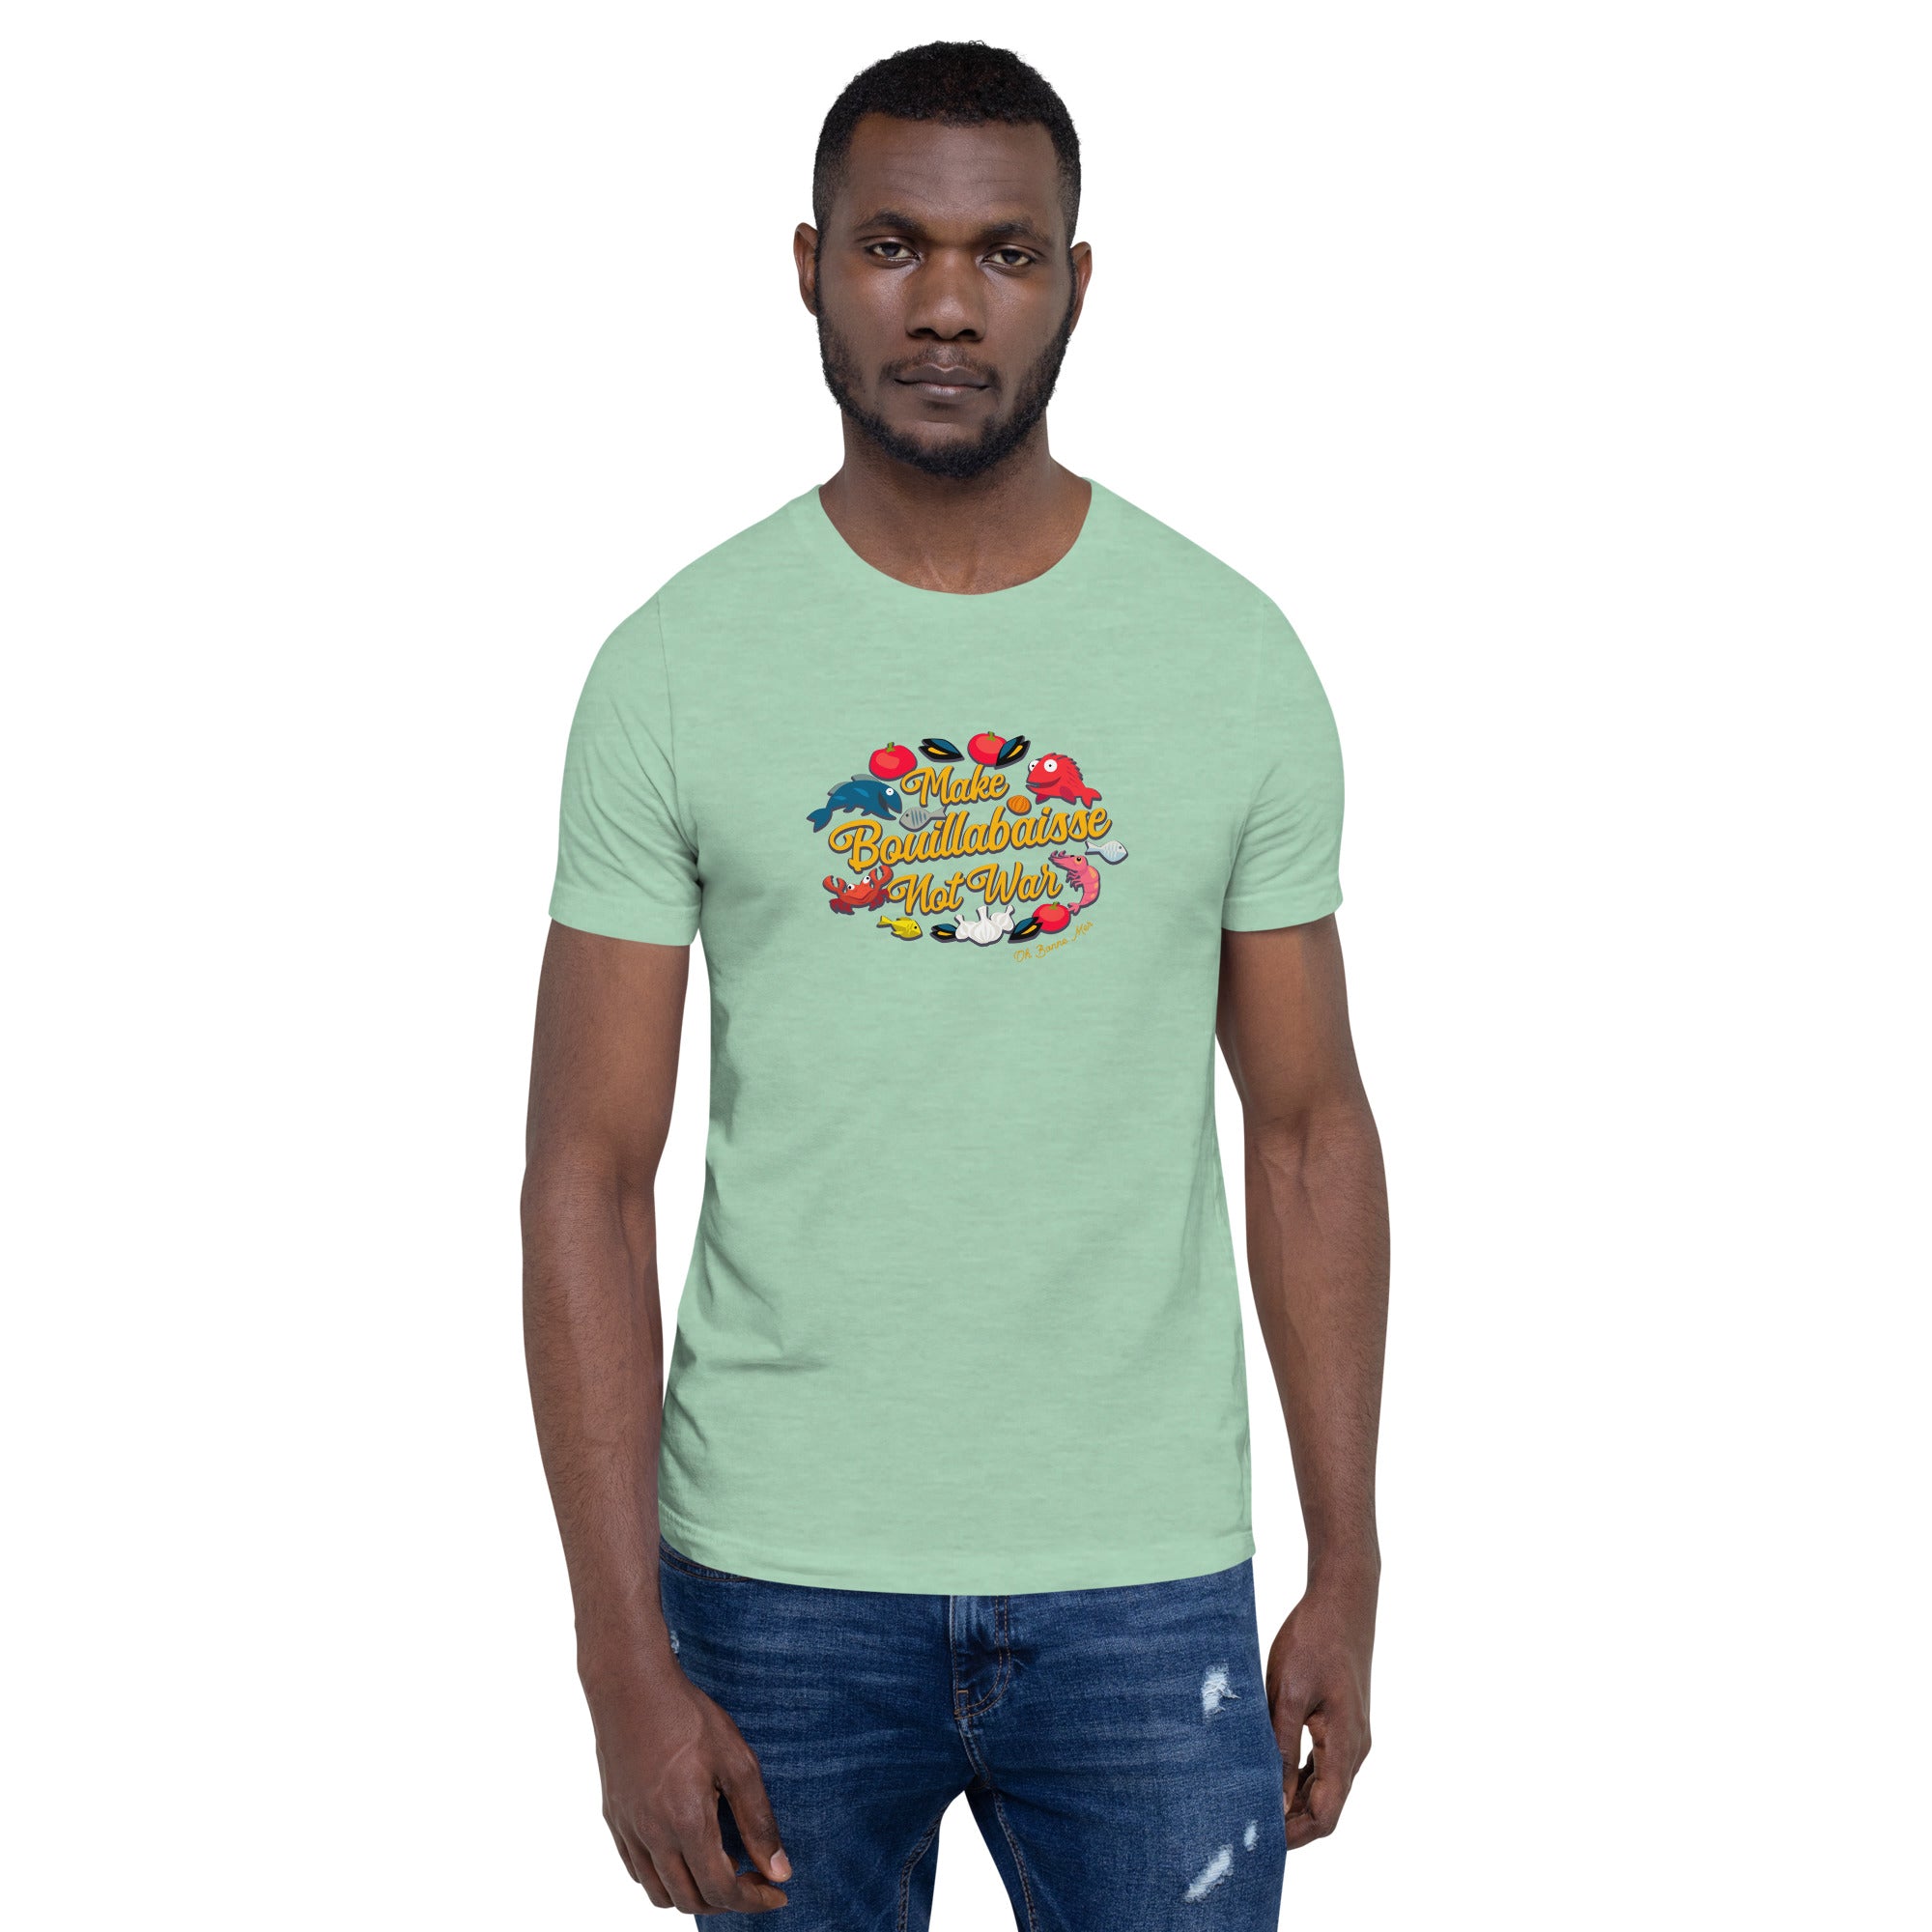 Unisex cotton t-shirt Make Bouillabaisse Not War on light heather colors